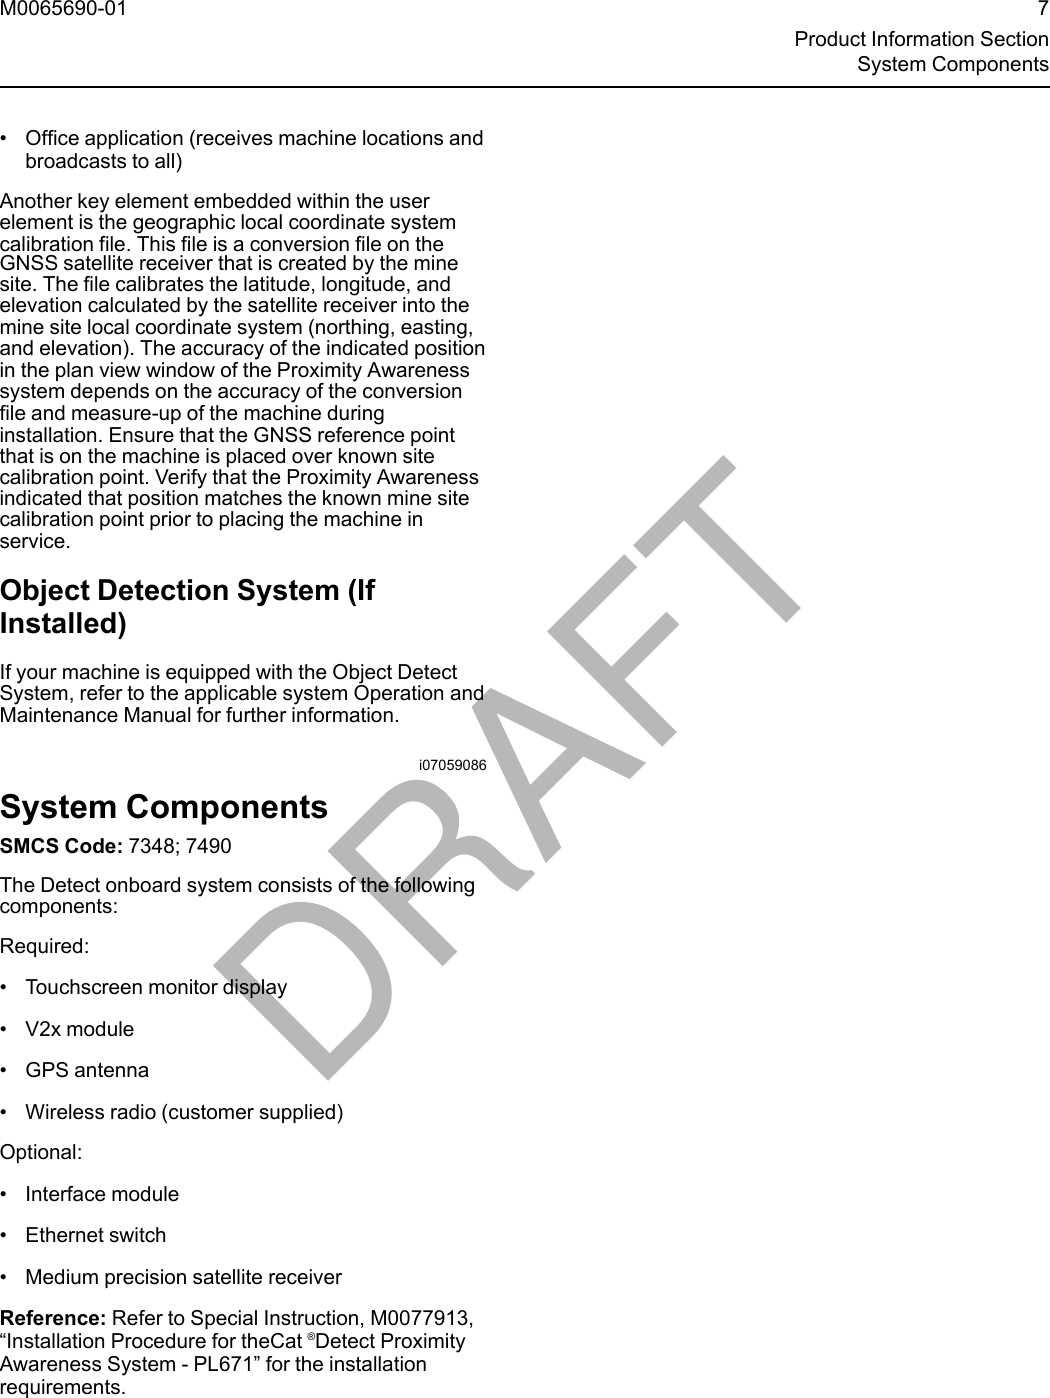 Page 7 of Caterpillar PL671 Digital Transmission System User Manual 